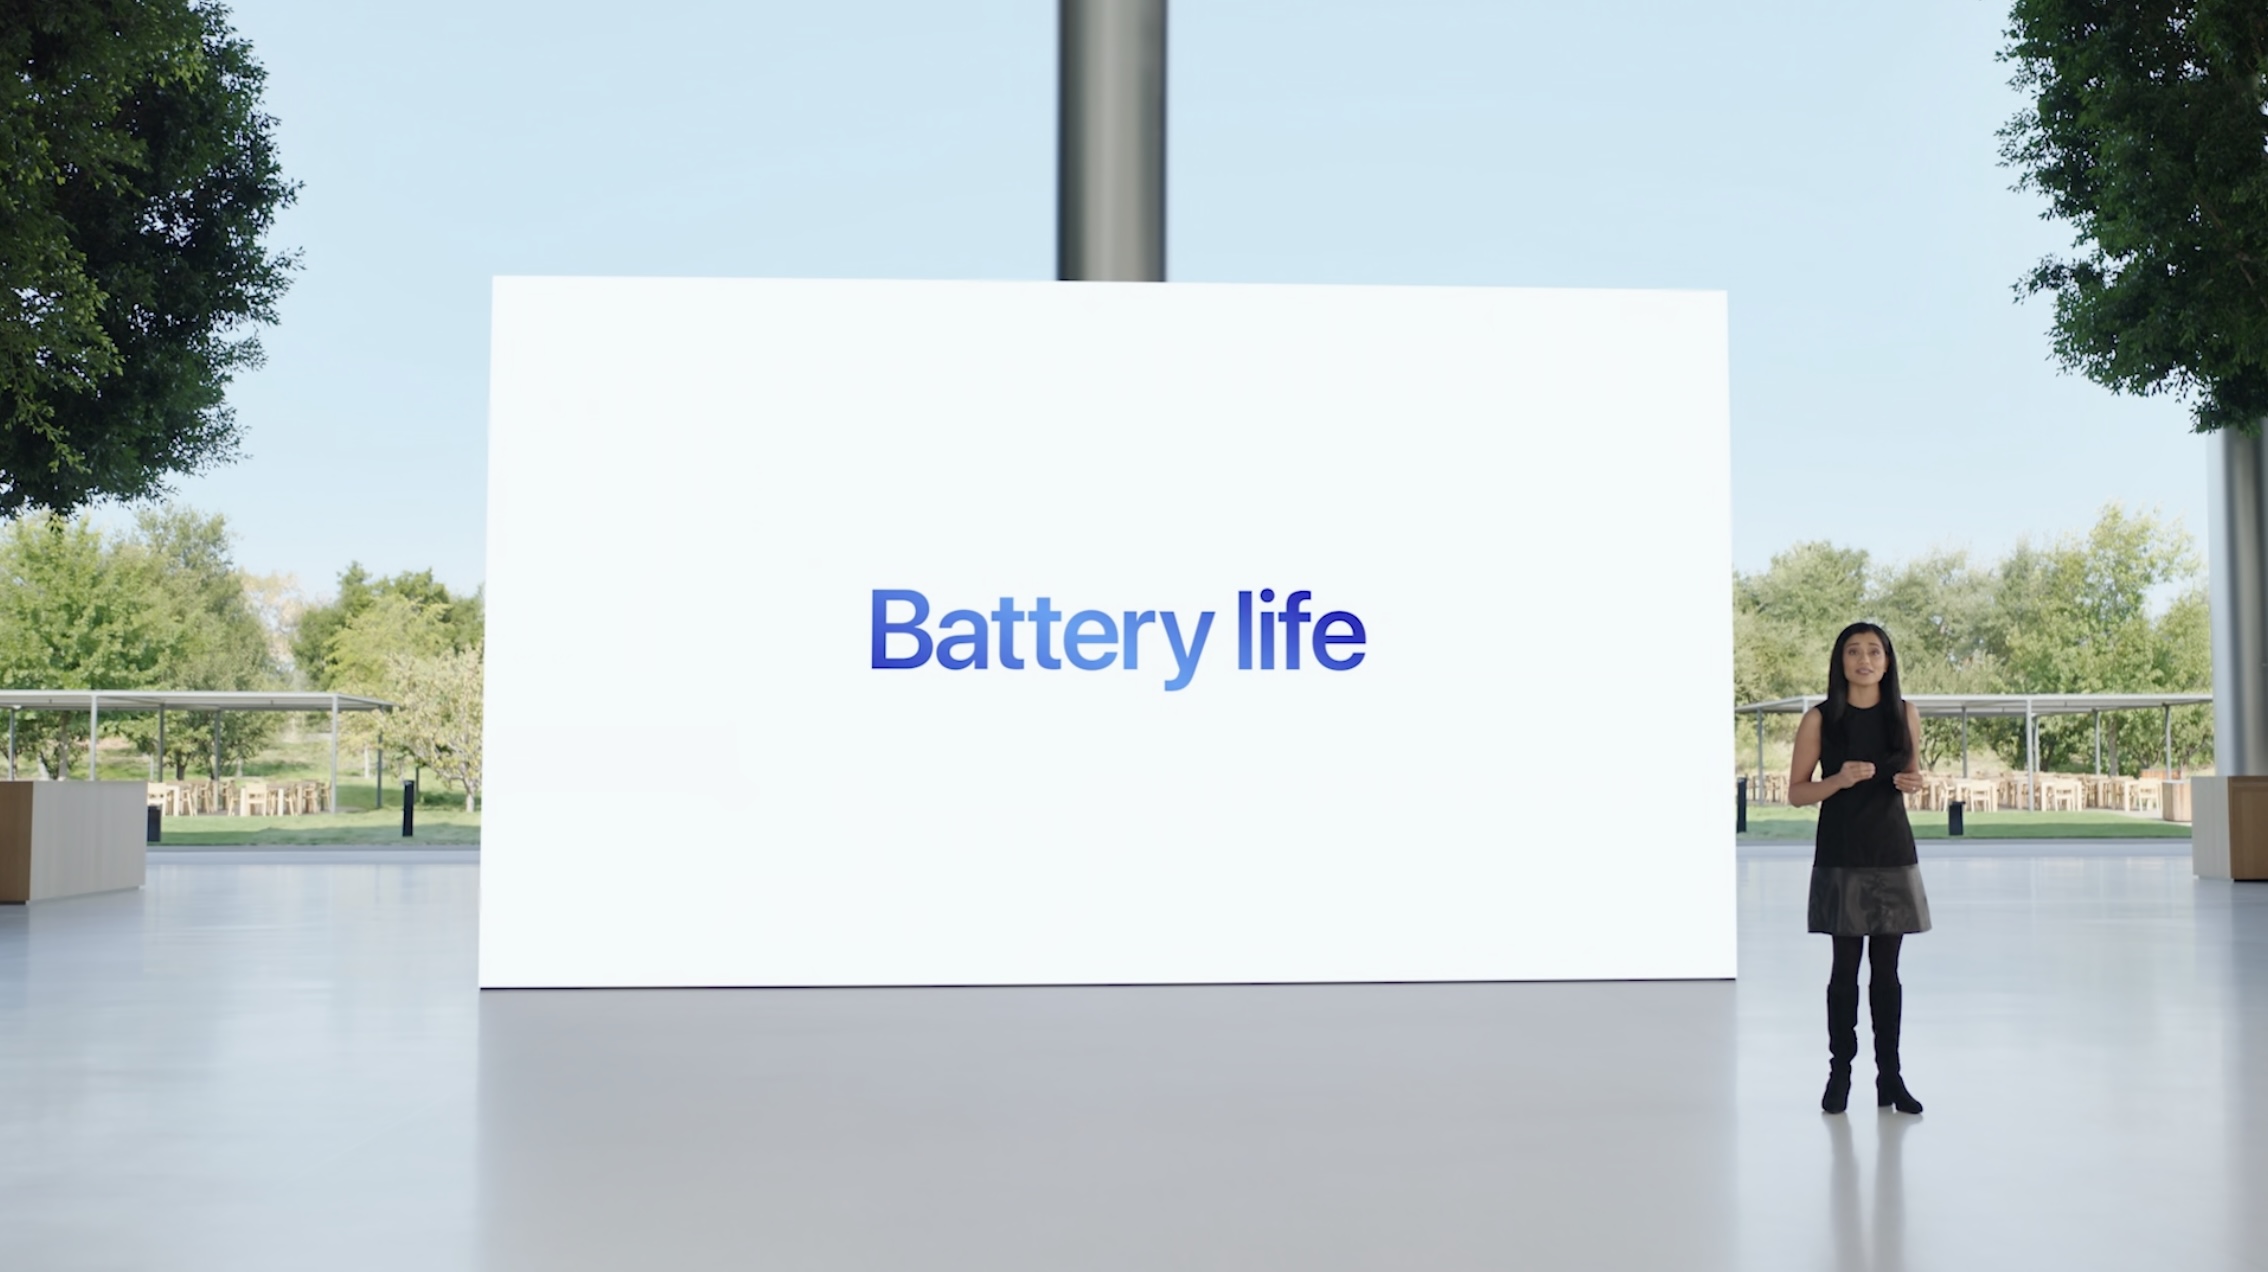 MacBook Air vs Pro - battery life